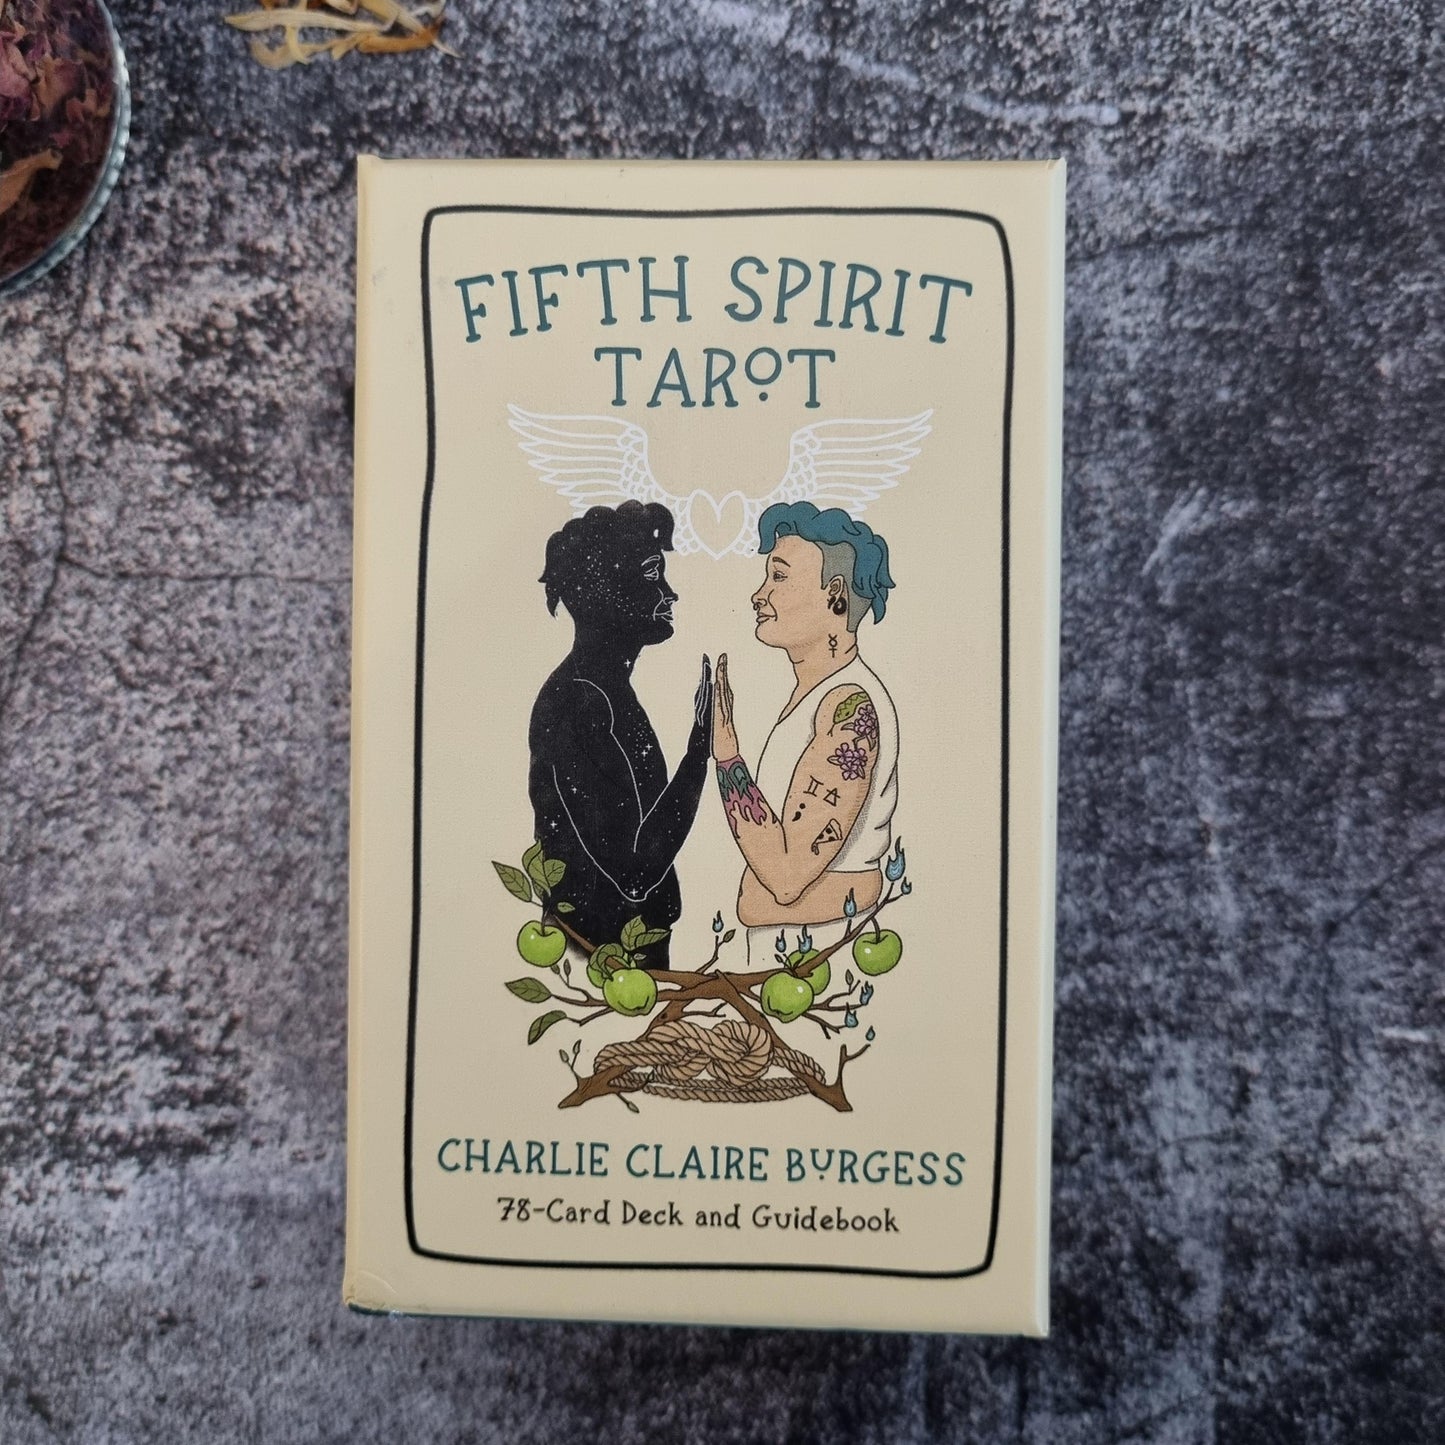 Fifth Spirit Tarot